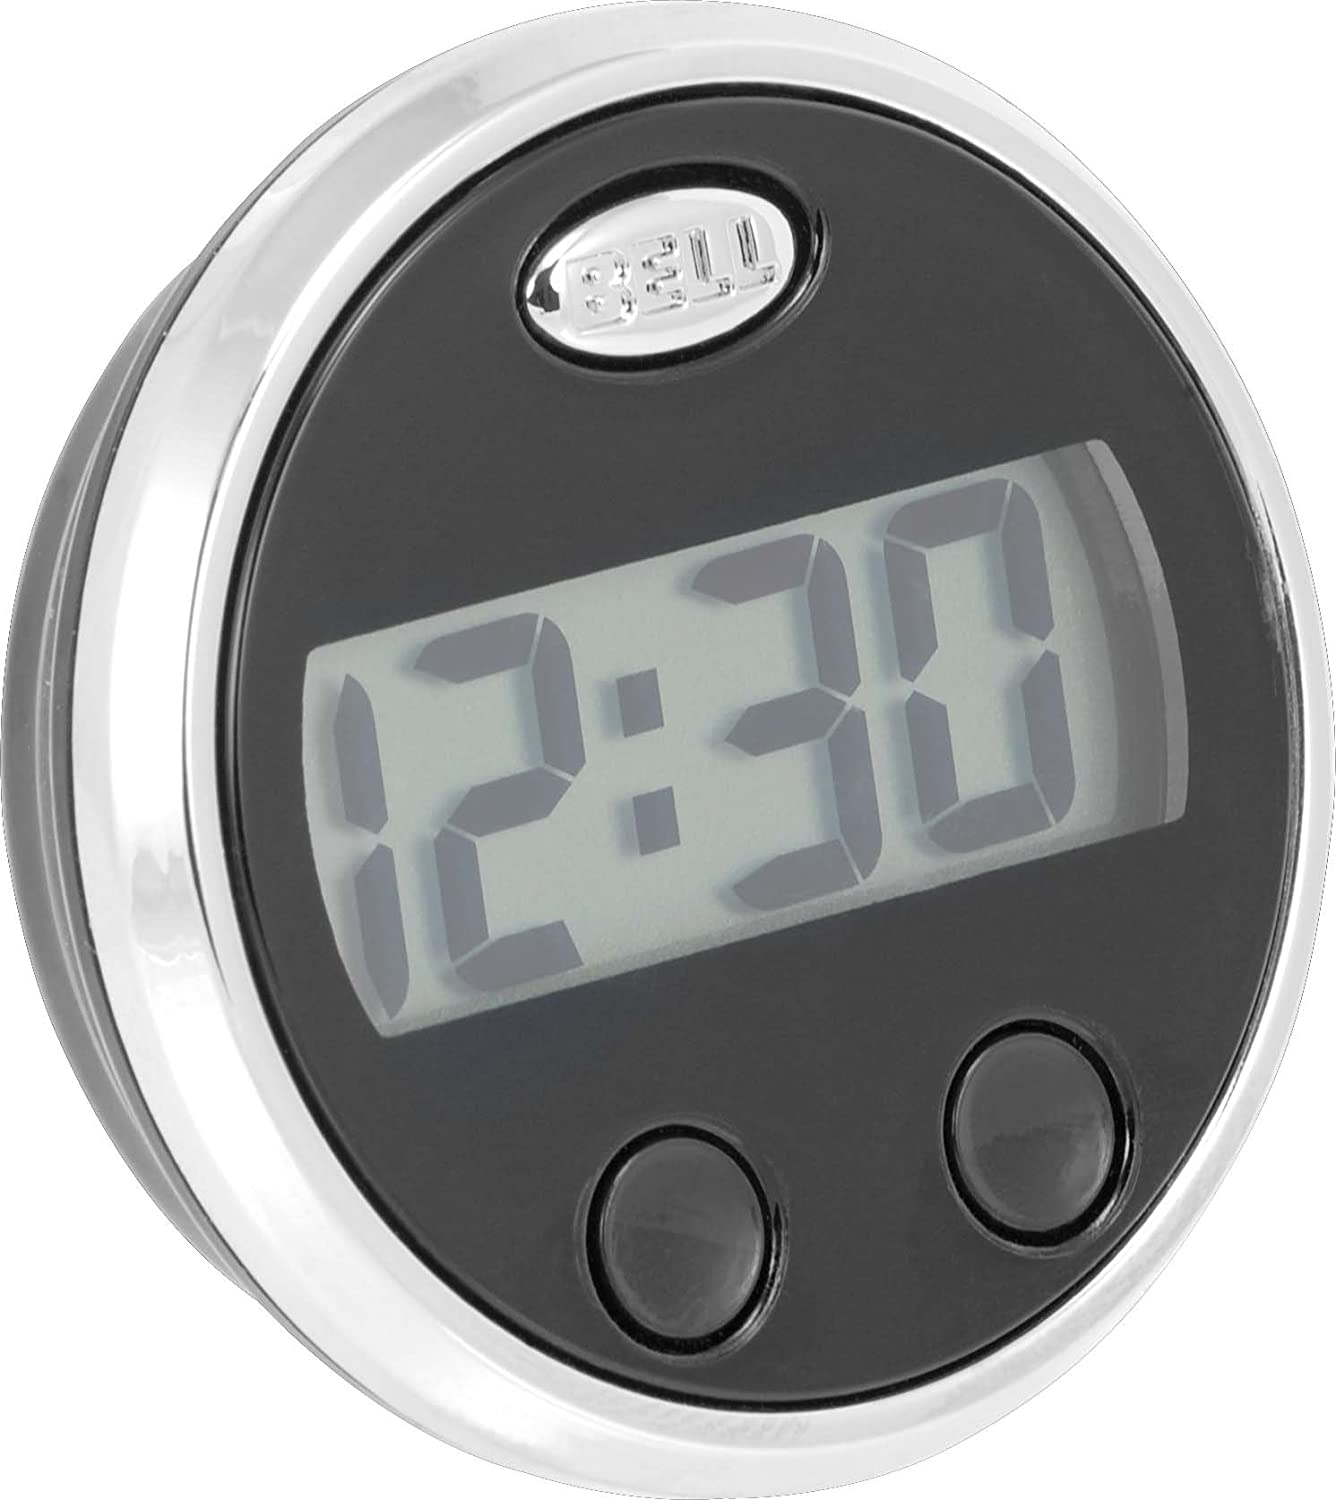 Bell Automotive Digital Clock